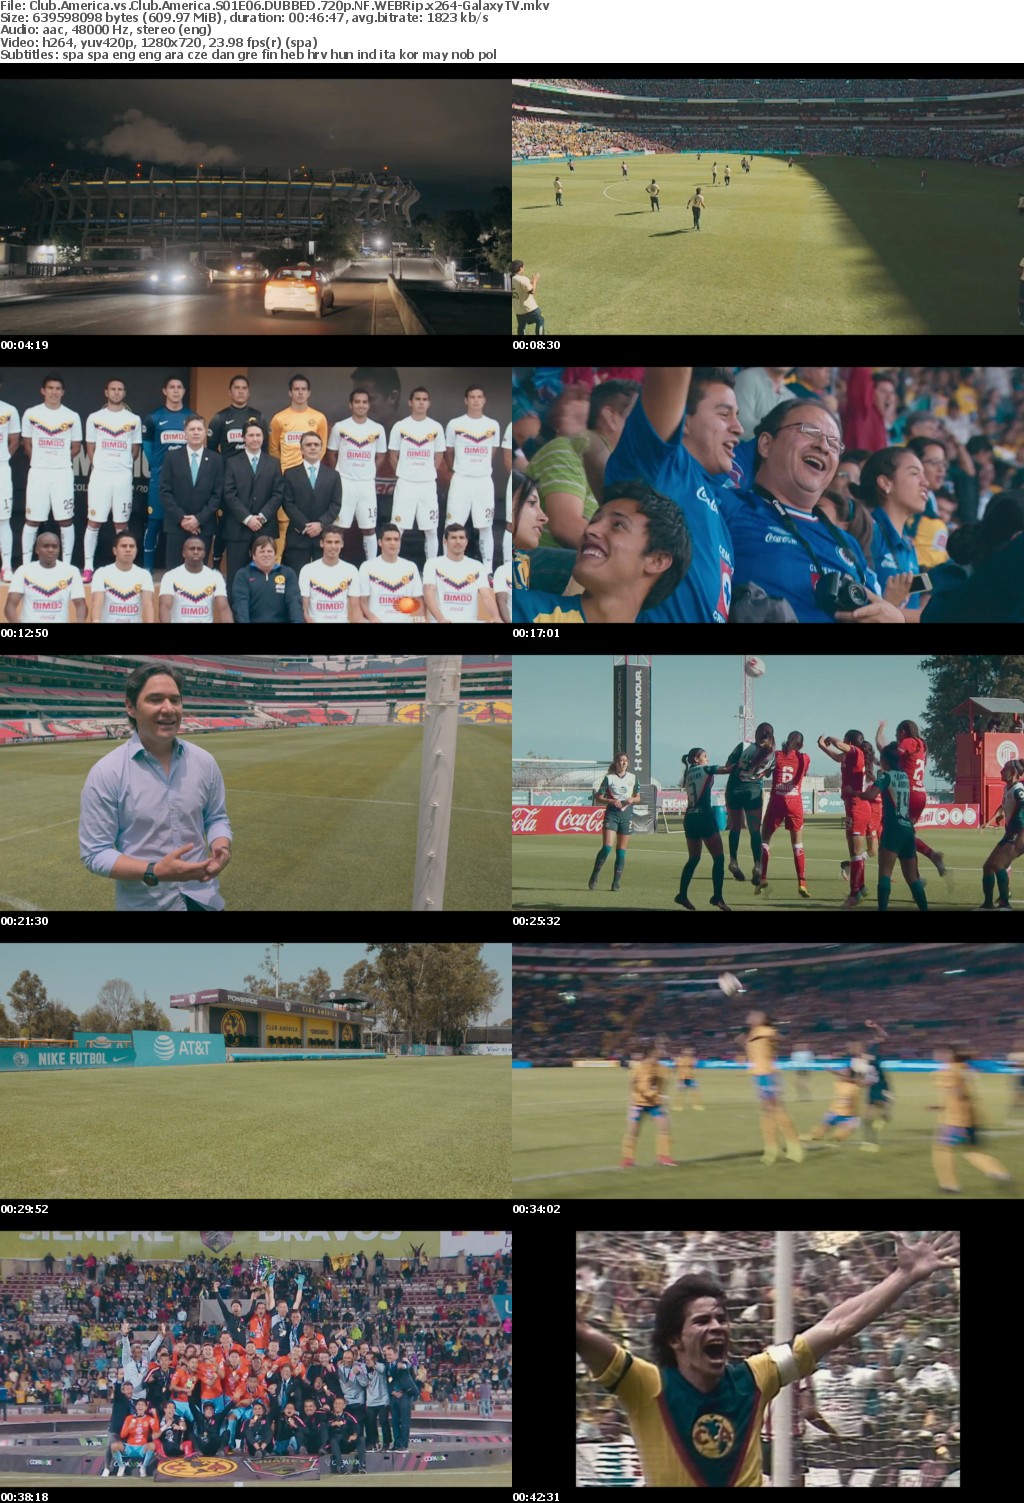 Club America vs Club America S01 COMPLETE DUBBED 720p NF WEBRip x264-GalaxyTV